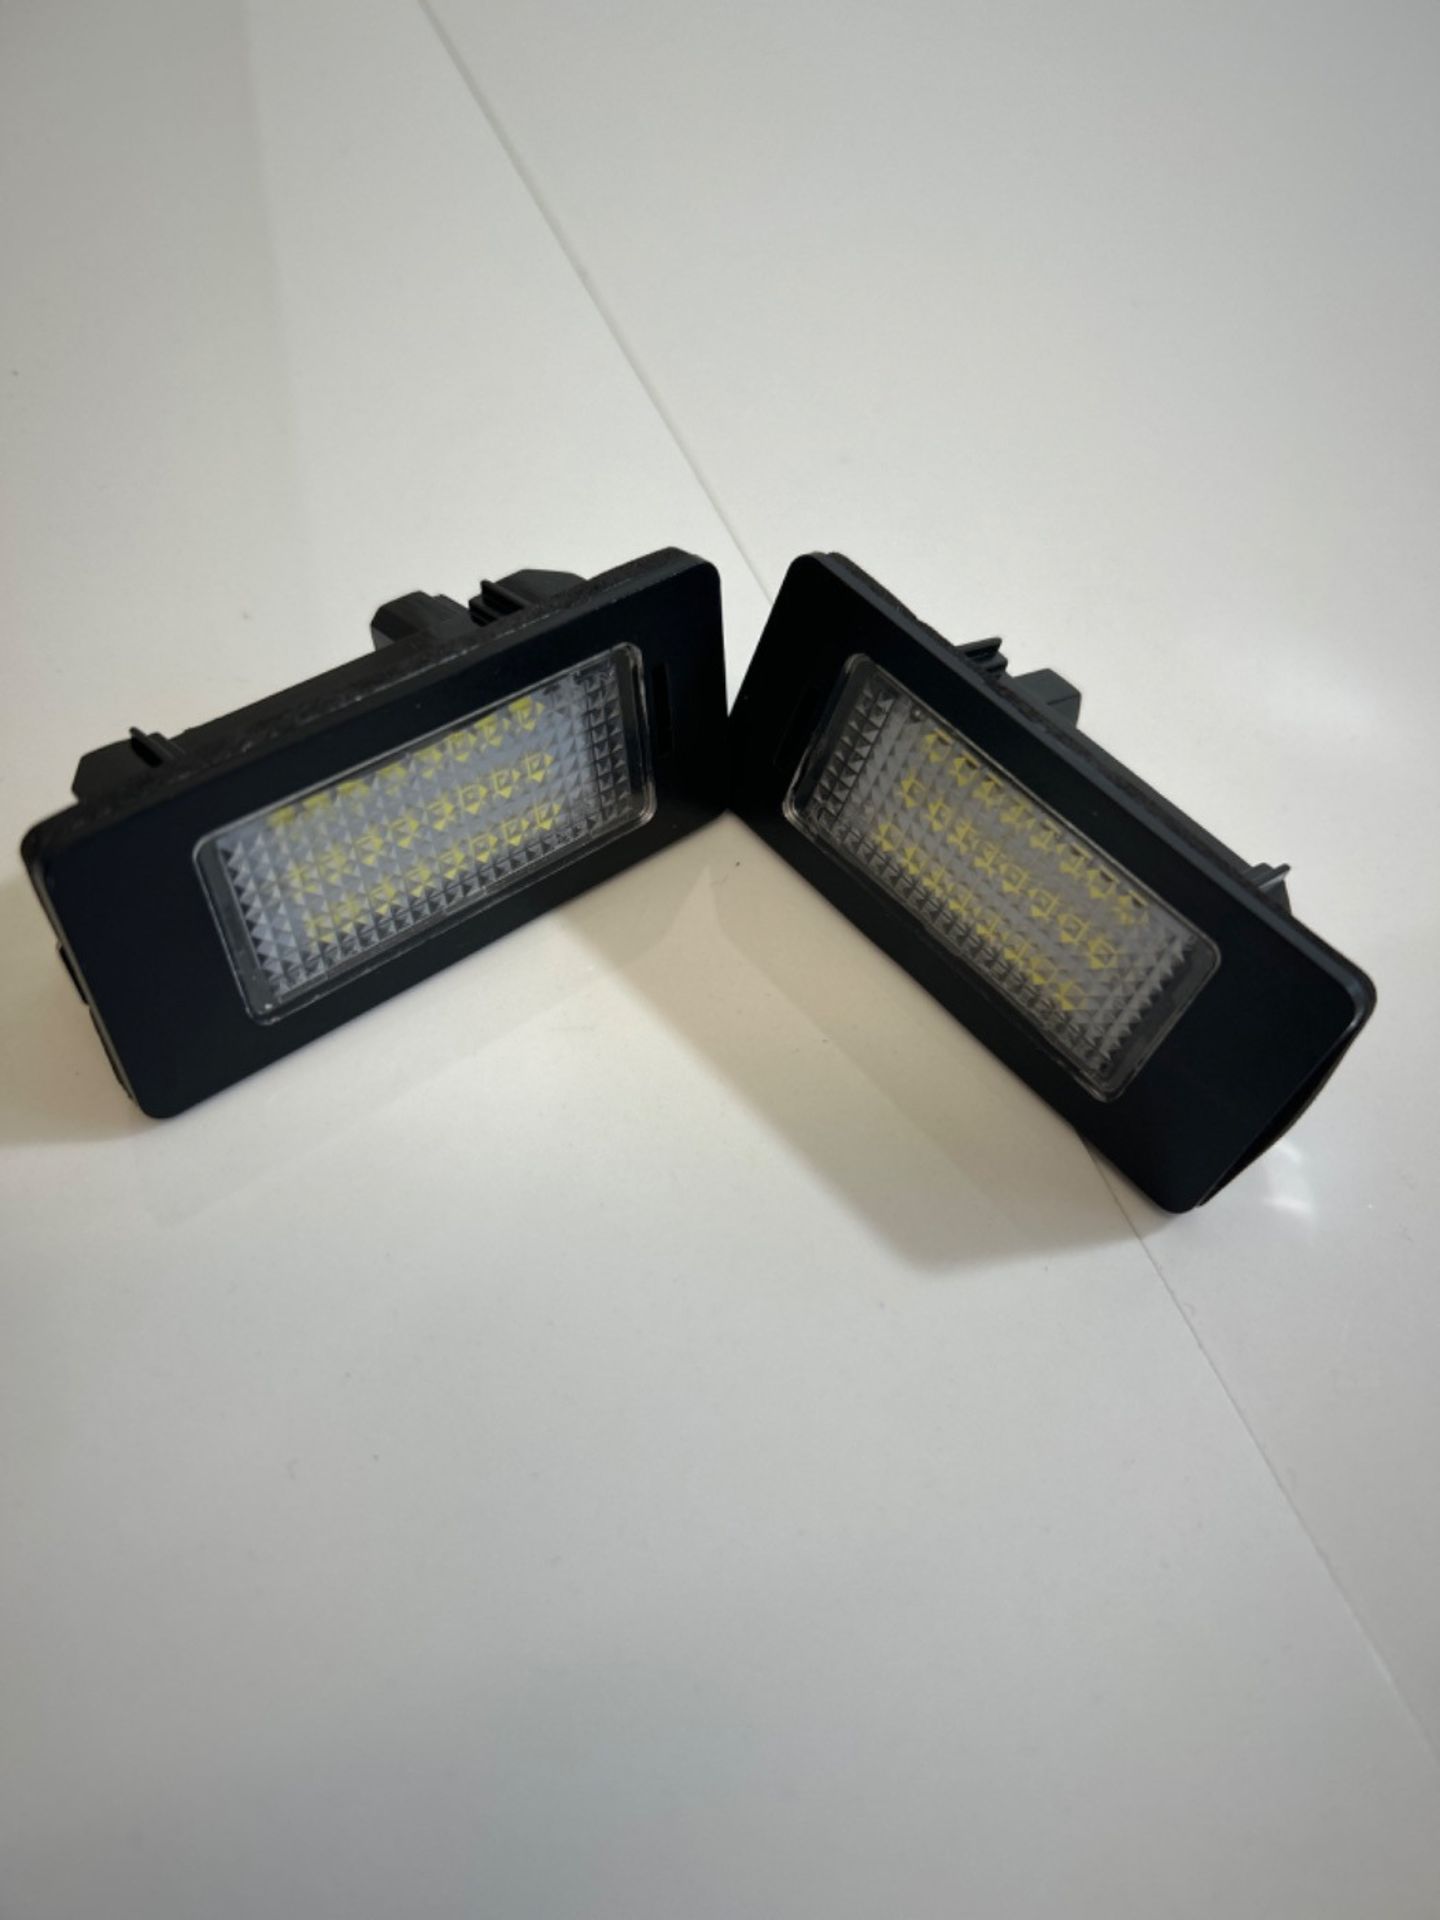 Aiyomi Pack of 2 LED Number Plate Lights, 24 LED SMD License Plate Lamp for BMW E39 E60 E61 E90 E91 - Image 2 of 3